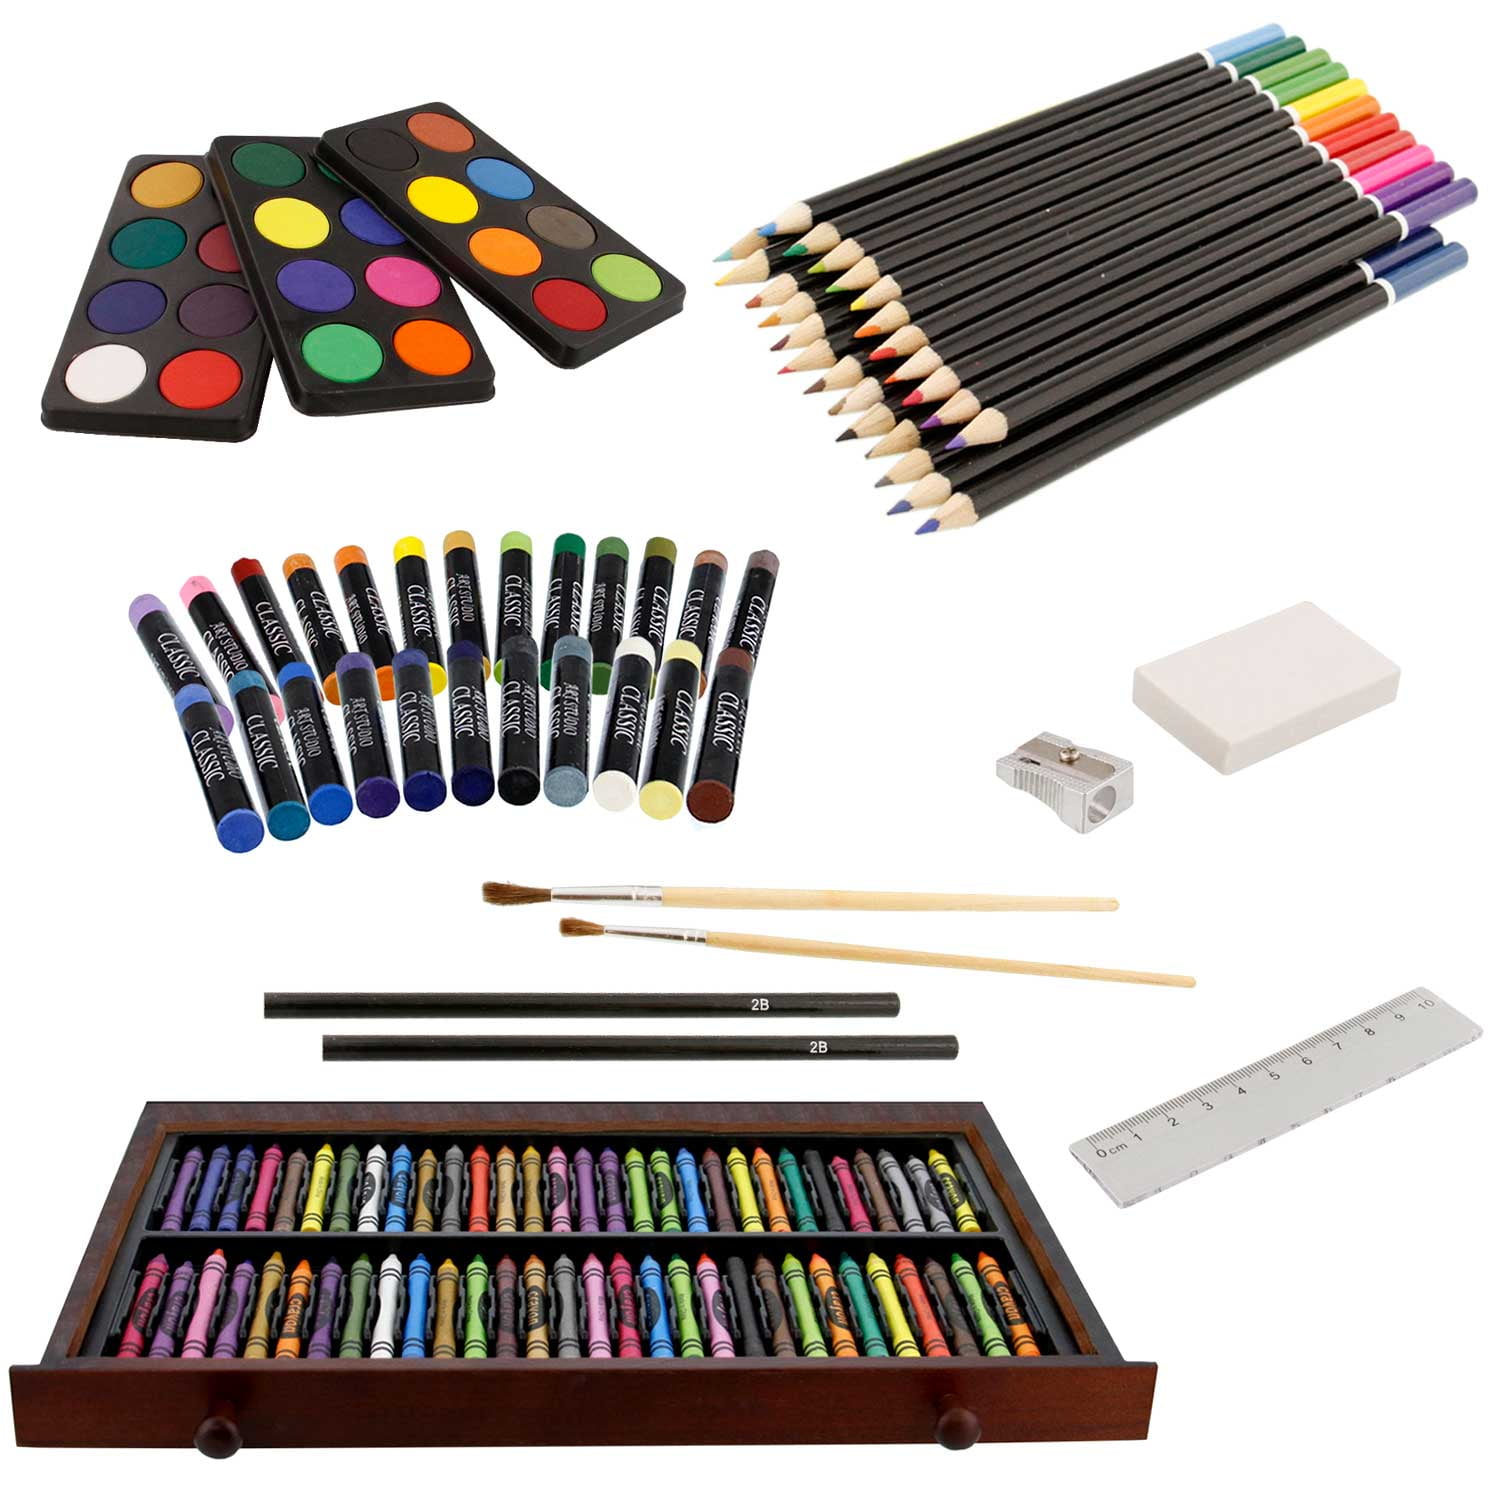 Art Set 143pc Art Drawing Supplies,Wooden Painting Coloring Kit